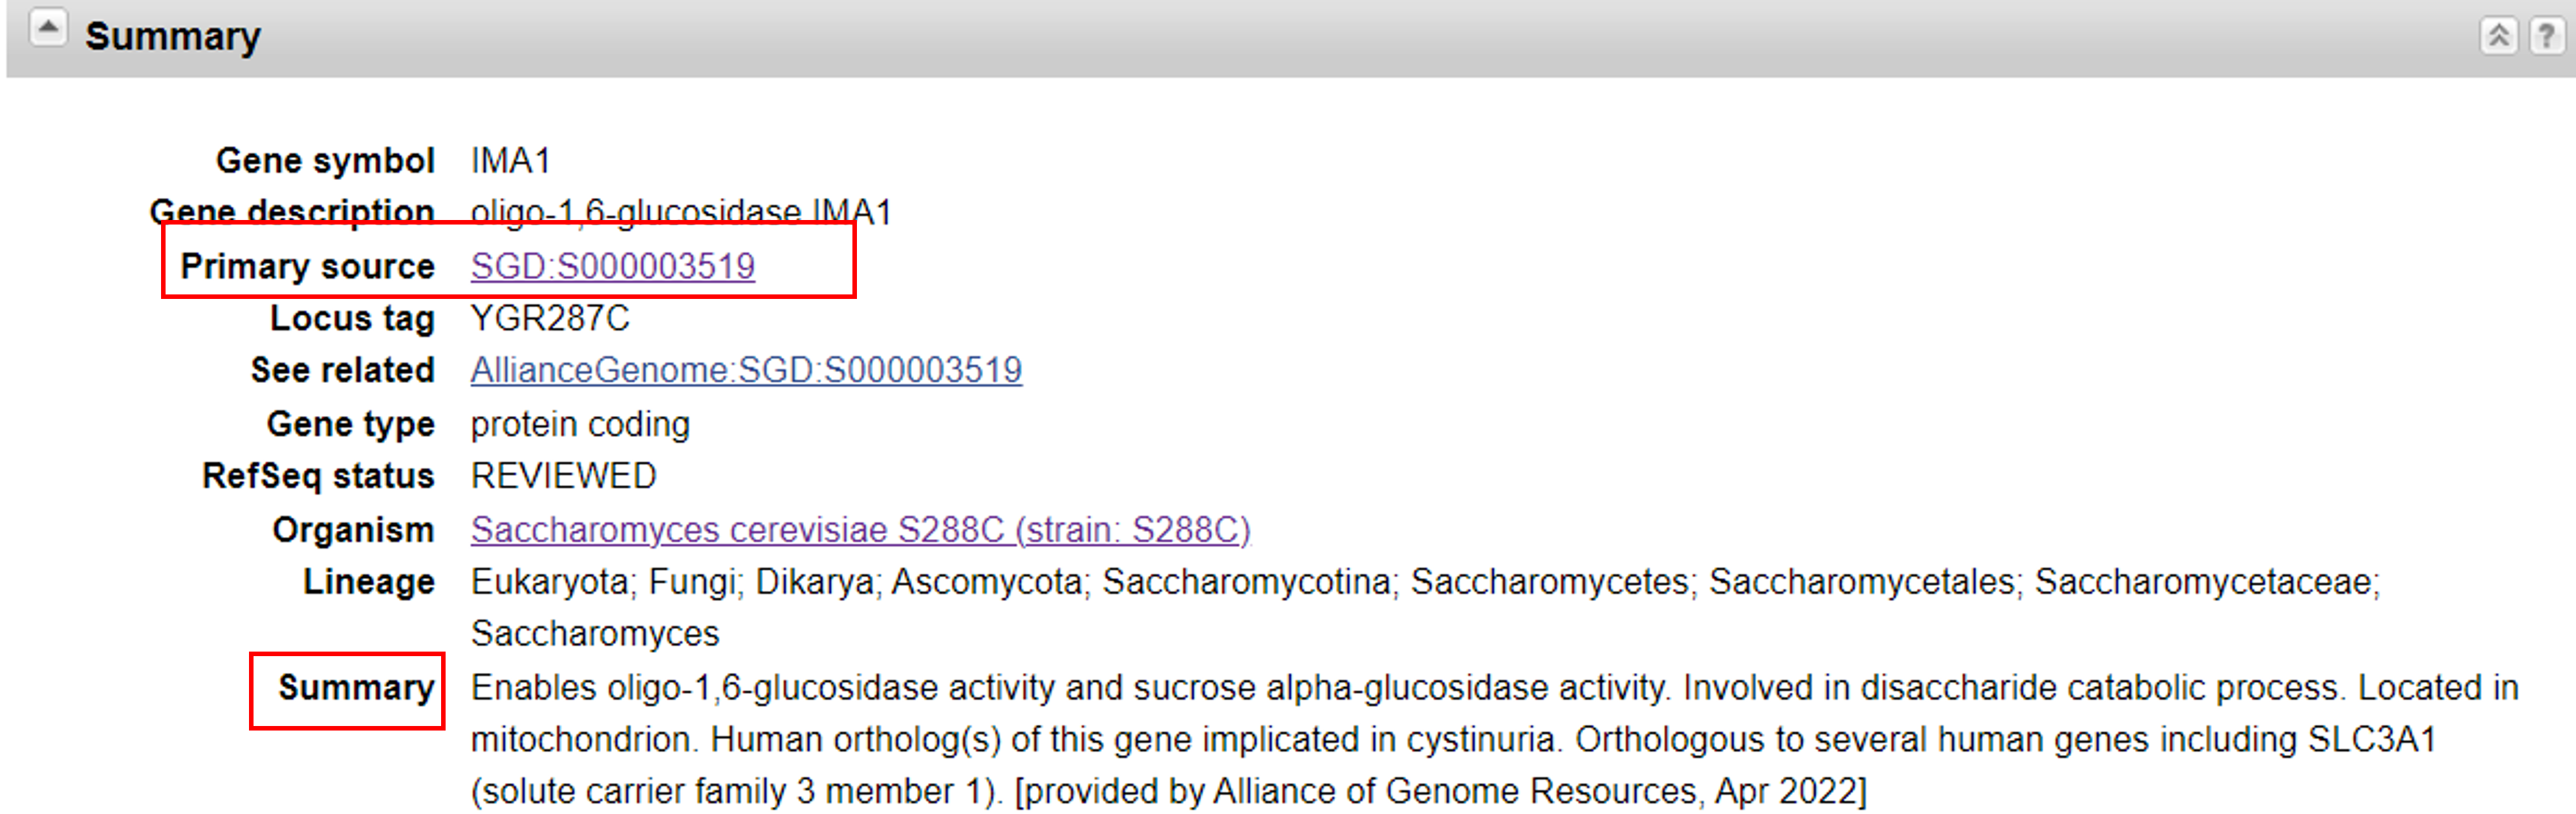 IMA1 gene page summary section